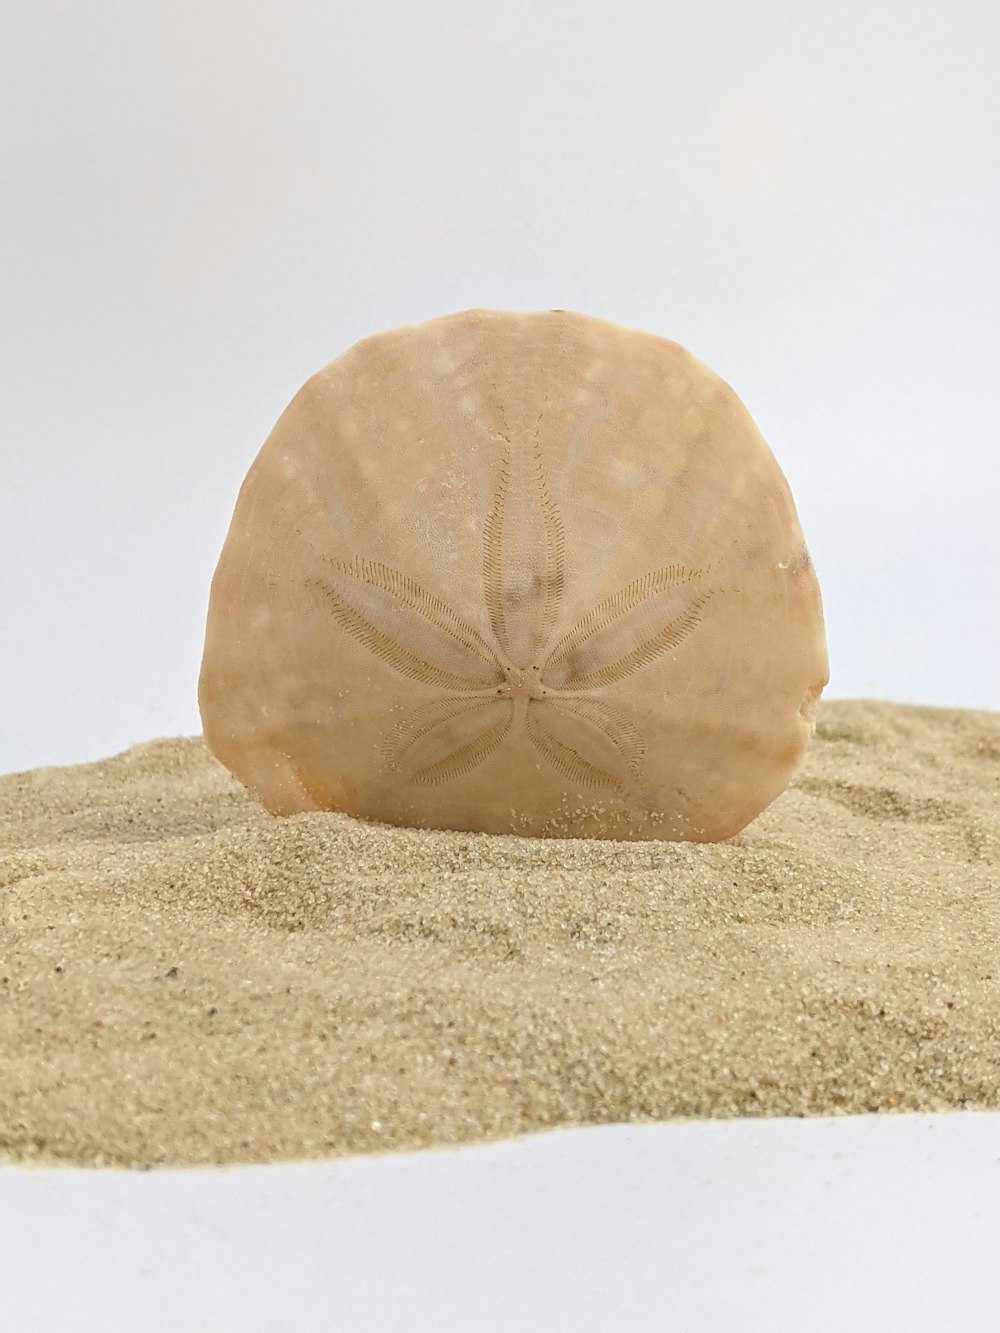 brown rock on brown sand during daytime